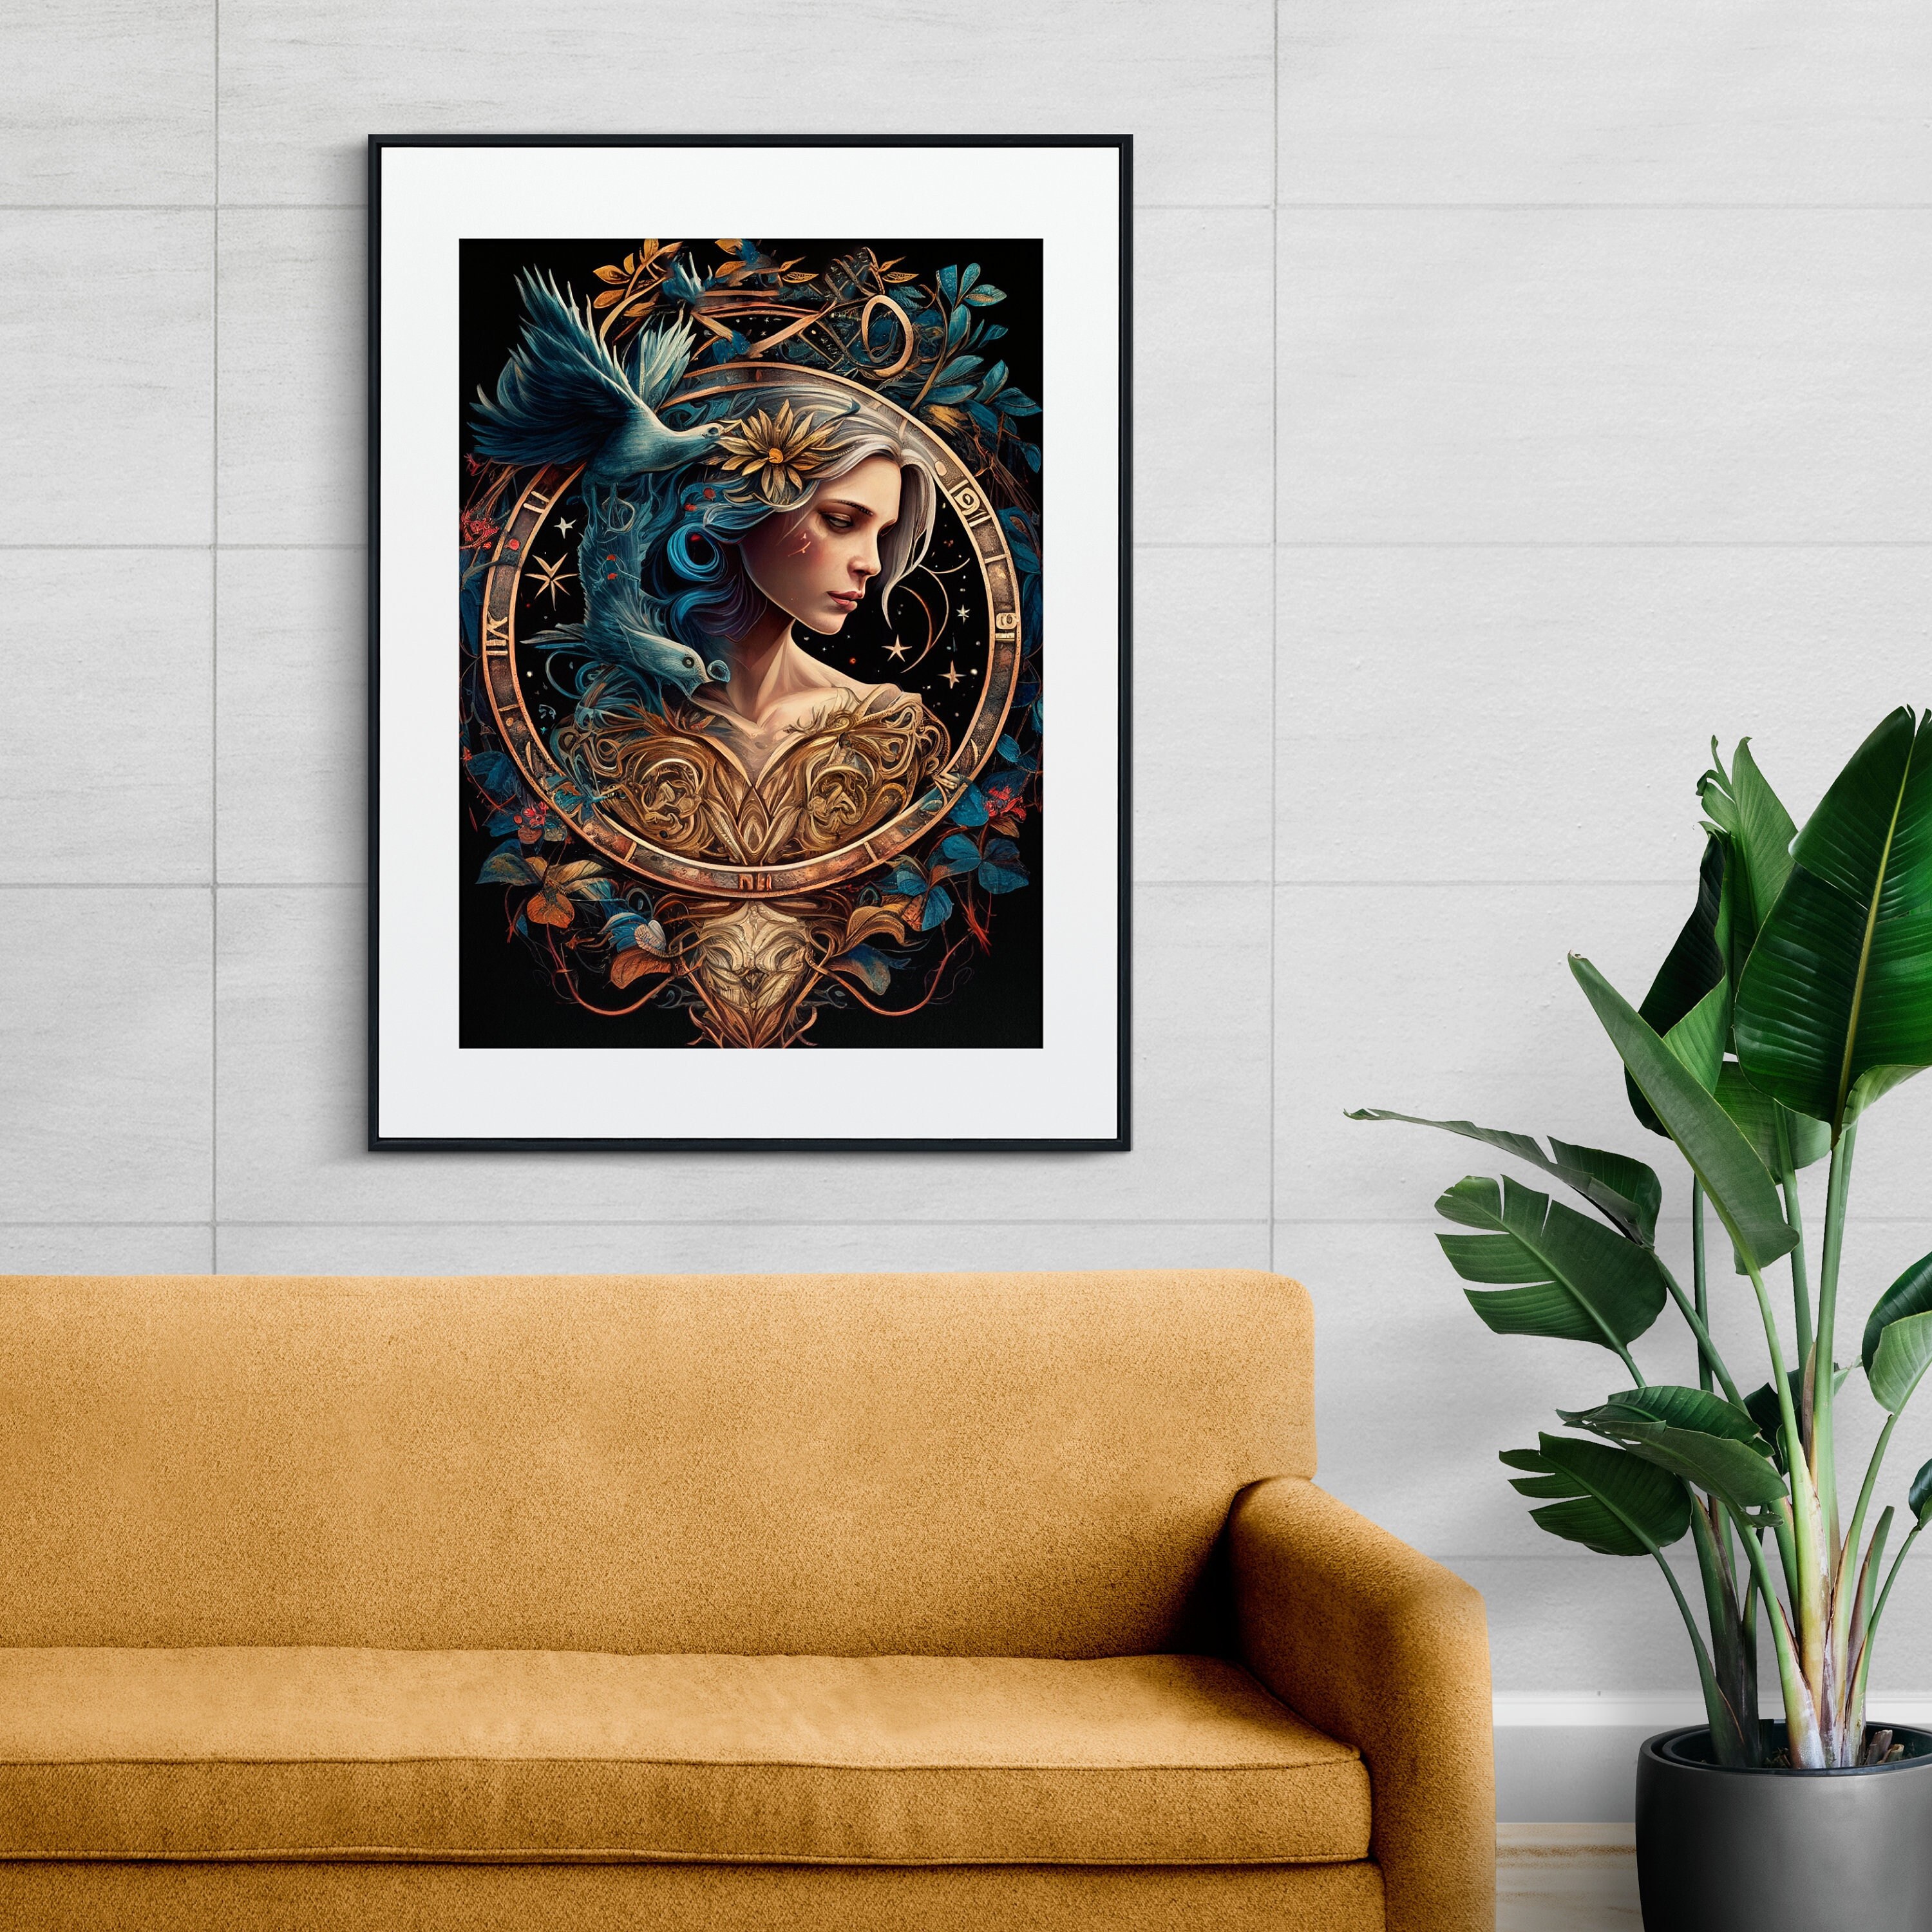 Fantasy Summer Goddess - Girl with Crystal Art Wall Room Poster - POSTER  20x30